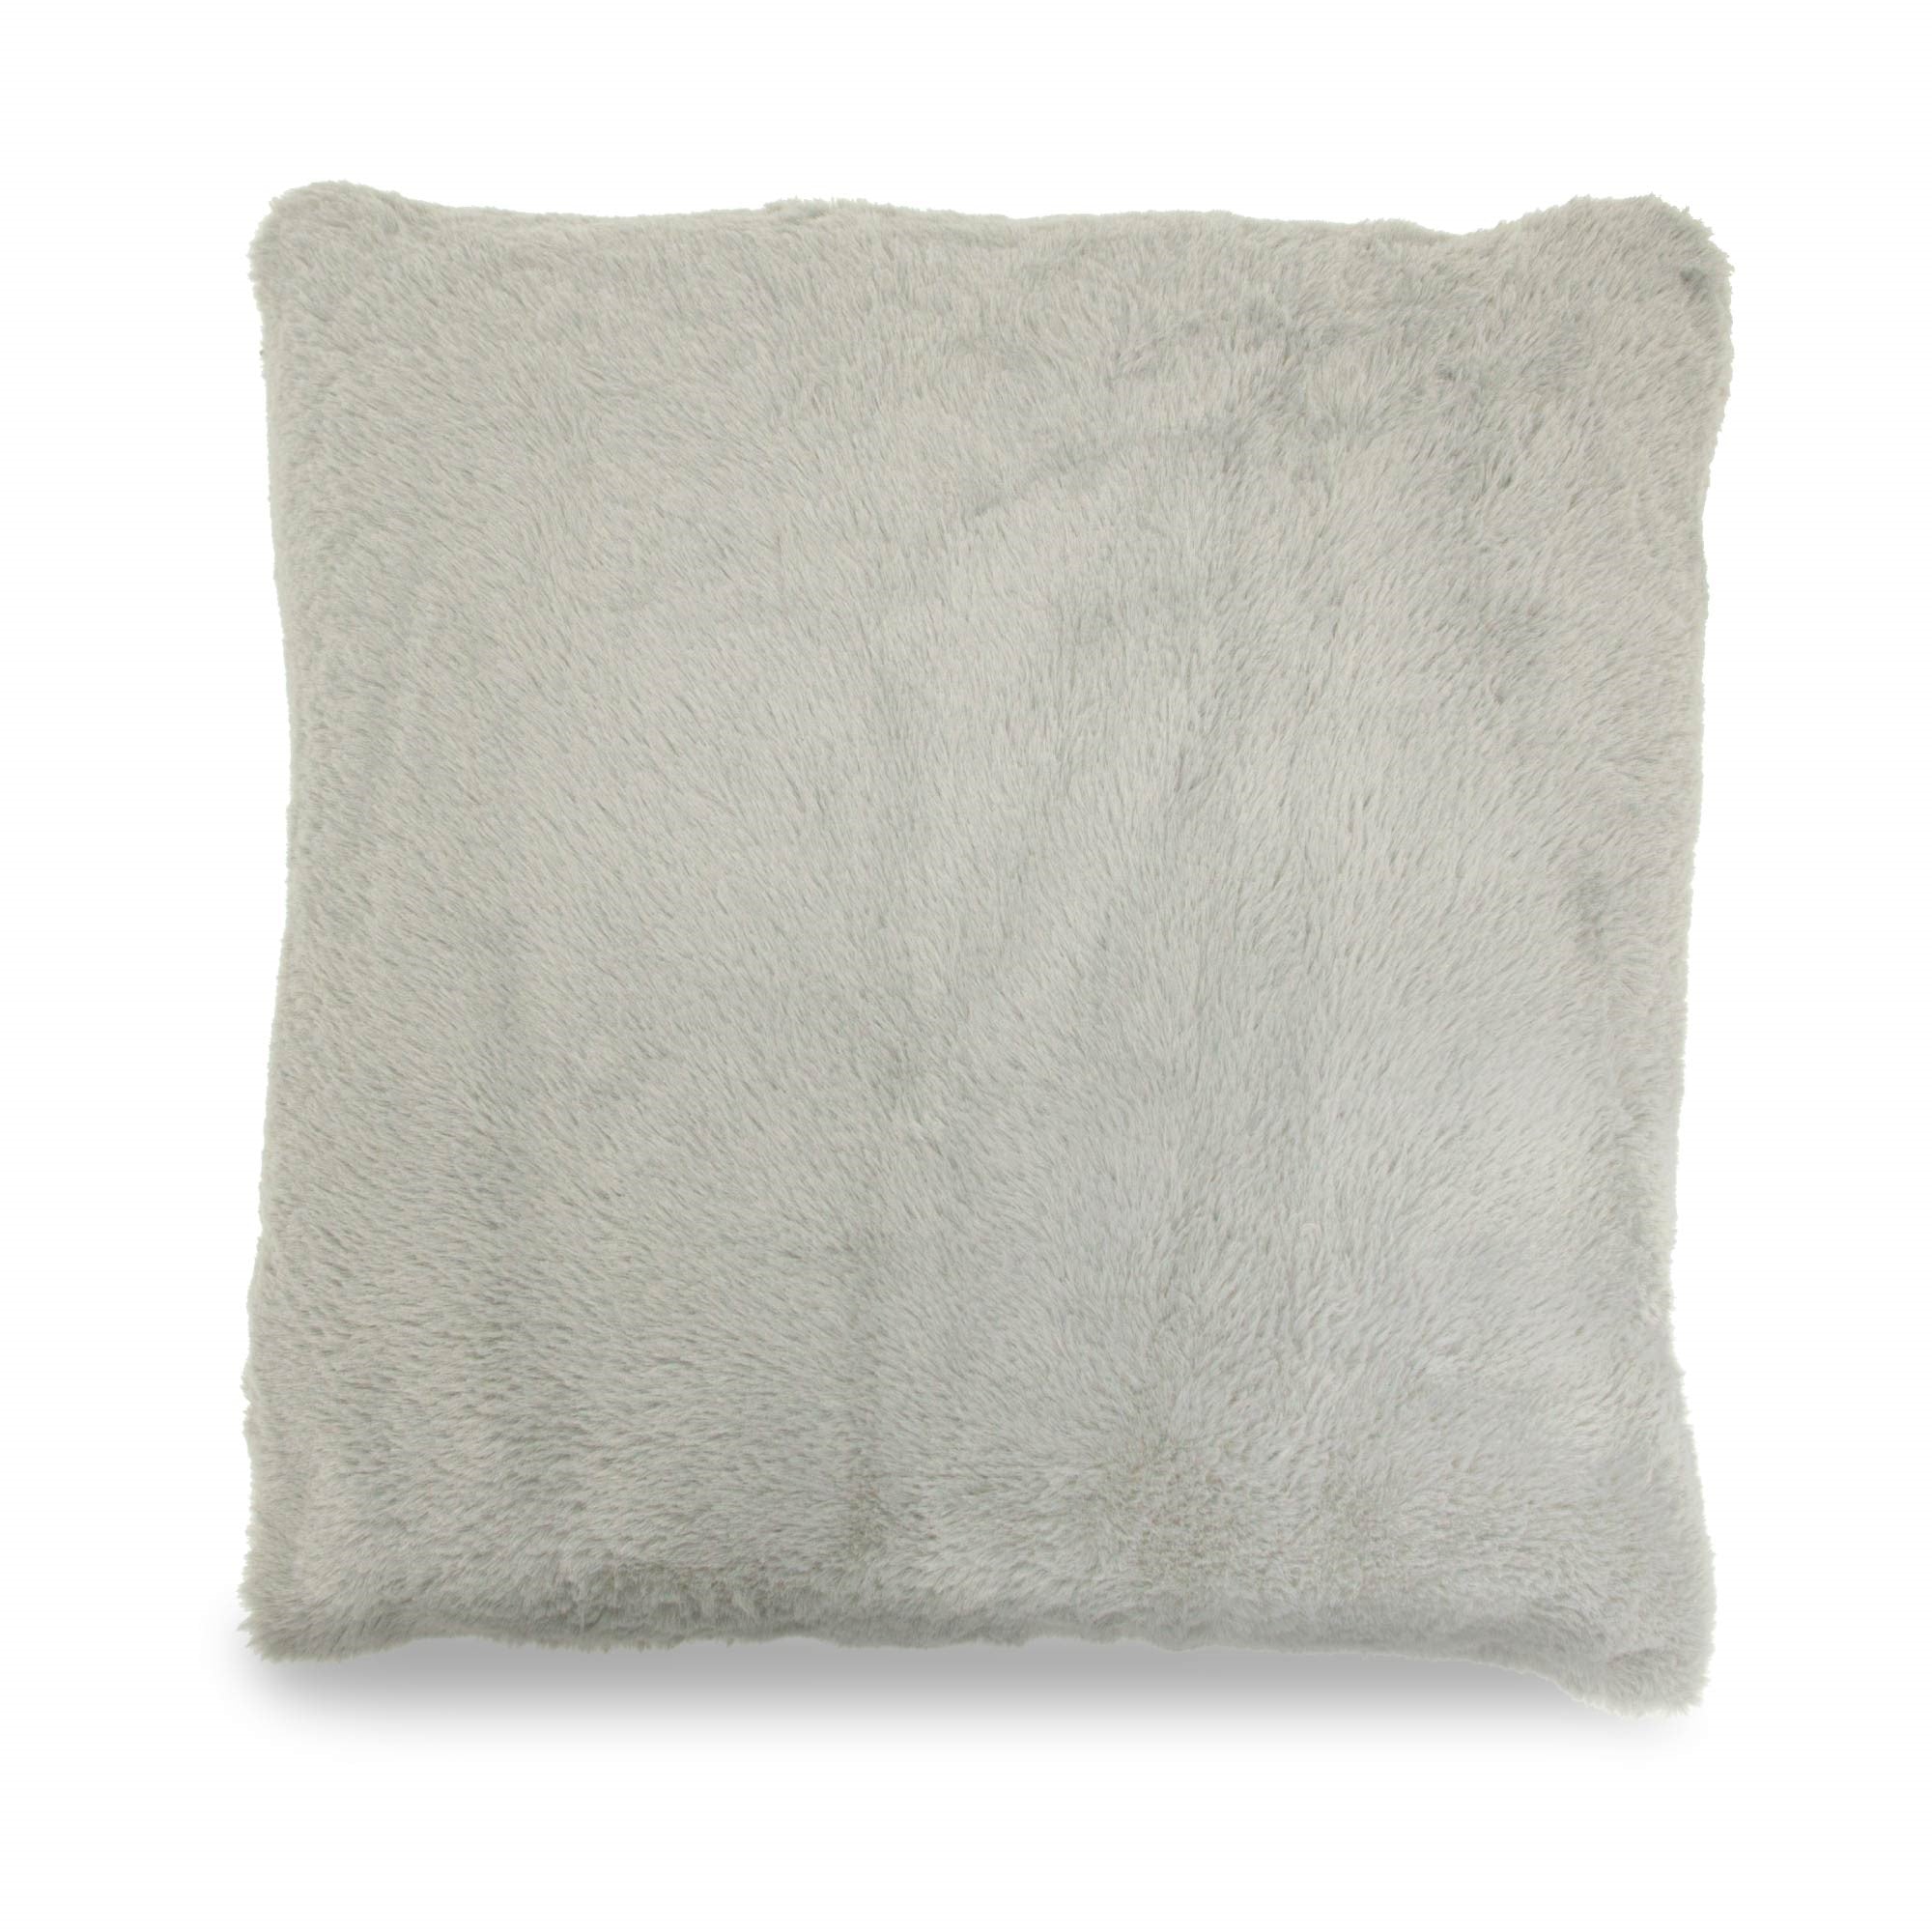 Cashmere Cushion 45x45cm - Silver or Charcoal - Charcoal - TJ Hughes